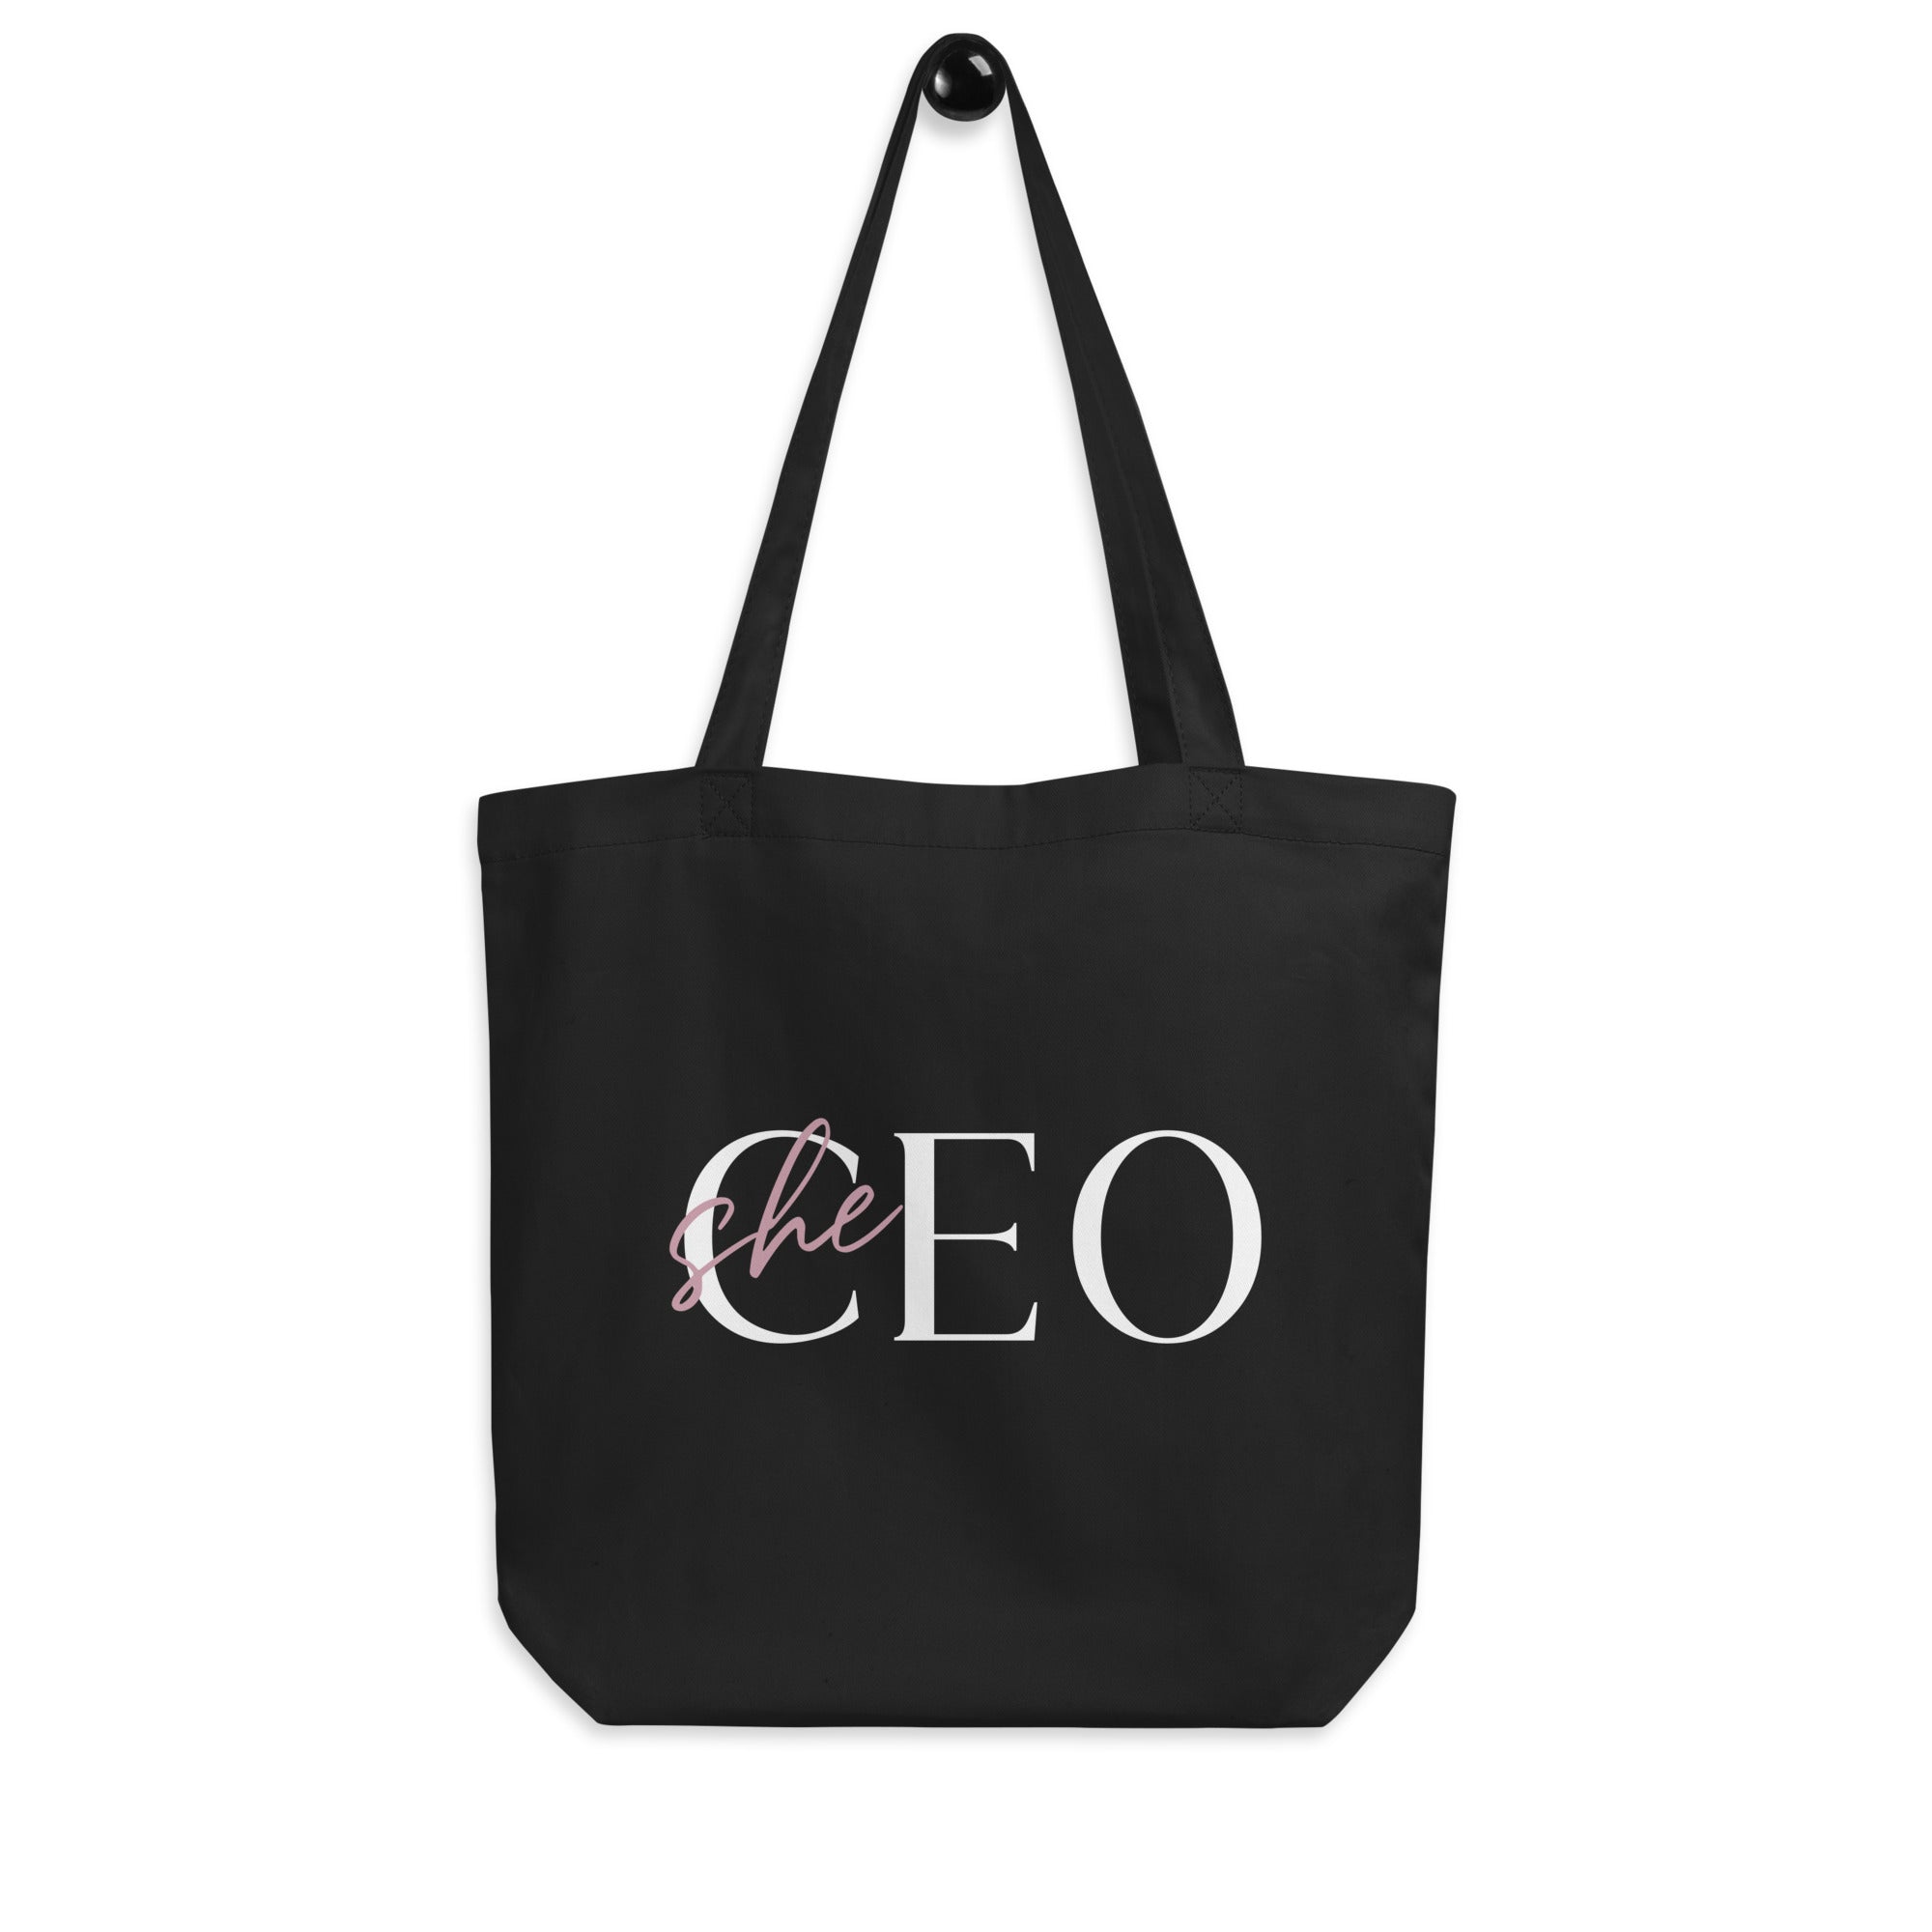 "SHE" CEO TOTE BAG